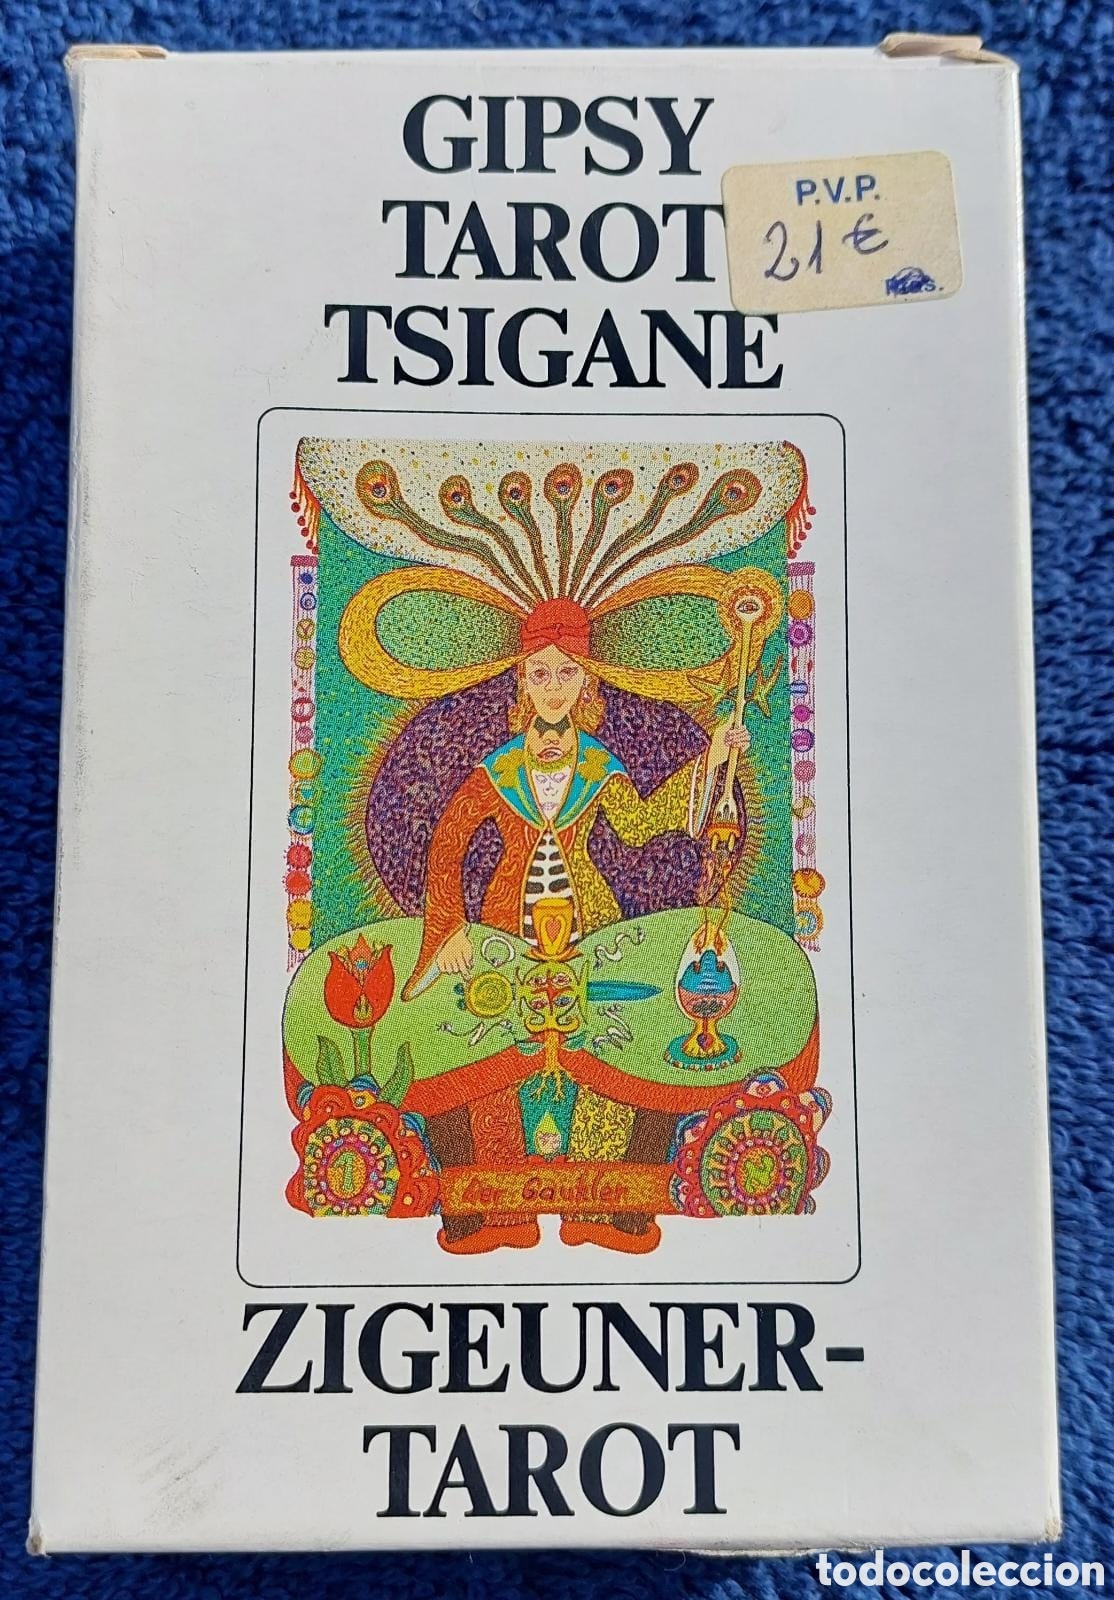 gipsy tarot tsigane. nuevo, precintado, cartas - Buy Antique tarot